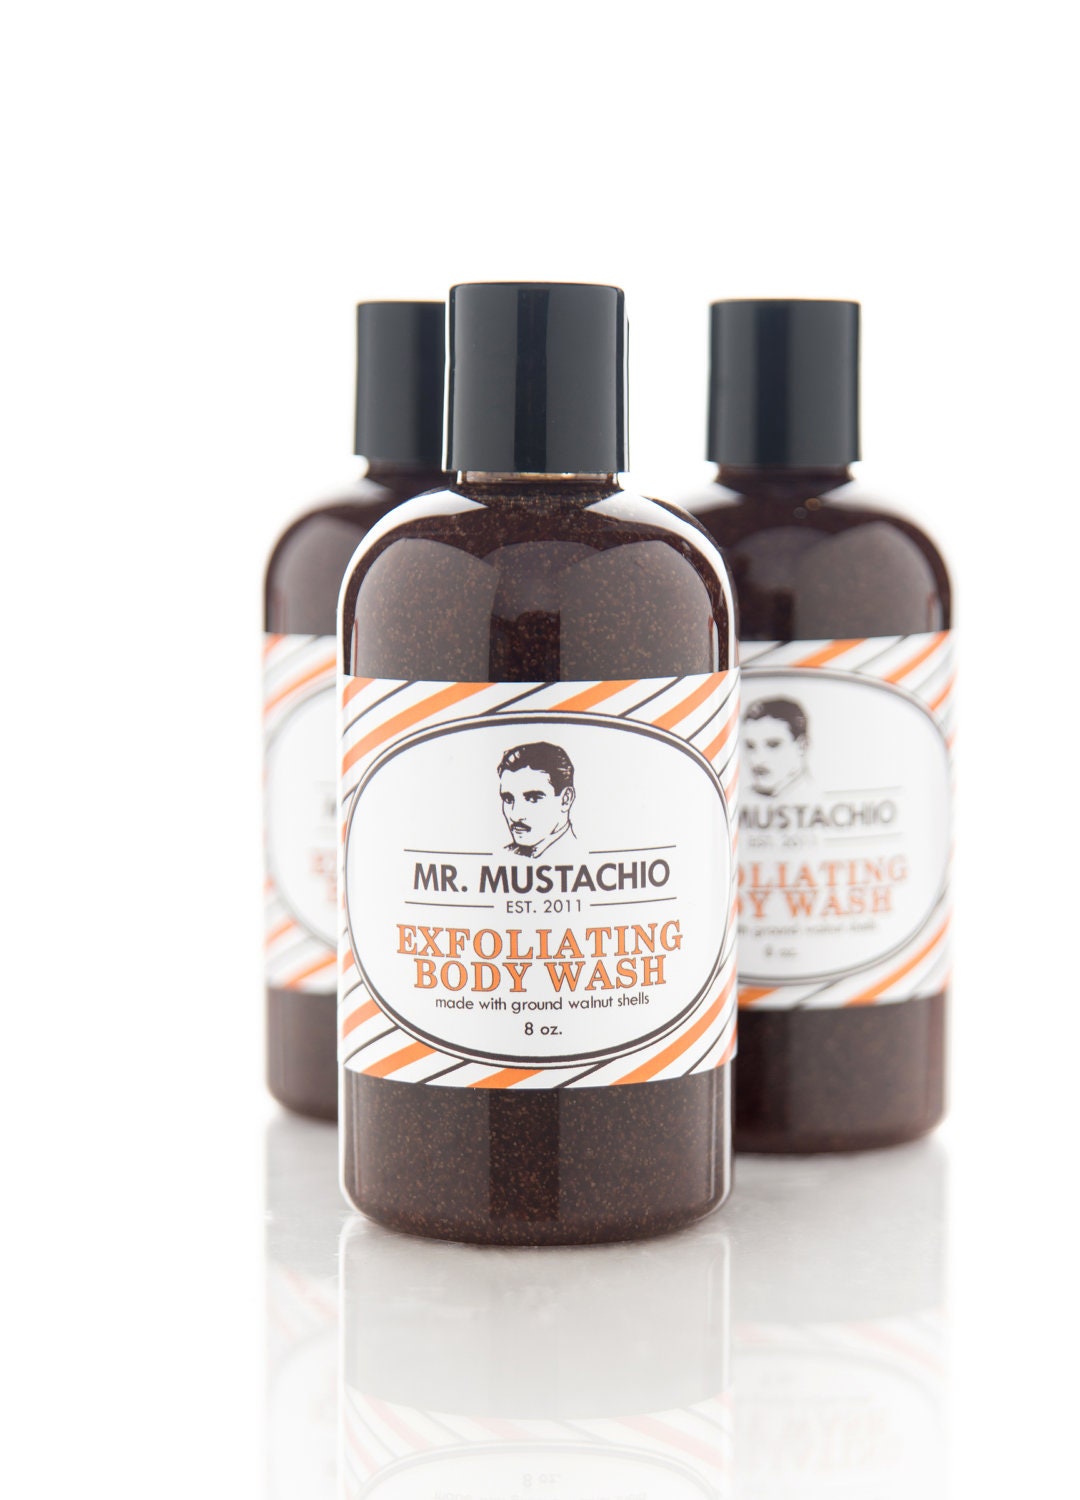 SALE - 1/2 off! - Exfoliating Body Wash - Mr. Mustachio - 100% pure essential oil scent - sweetpetula